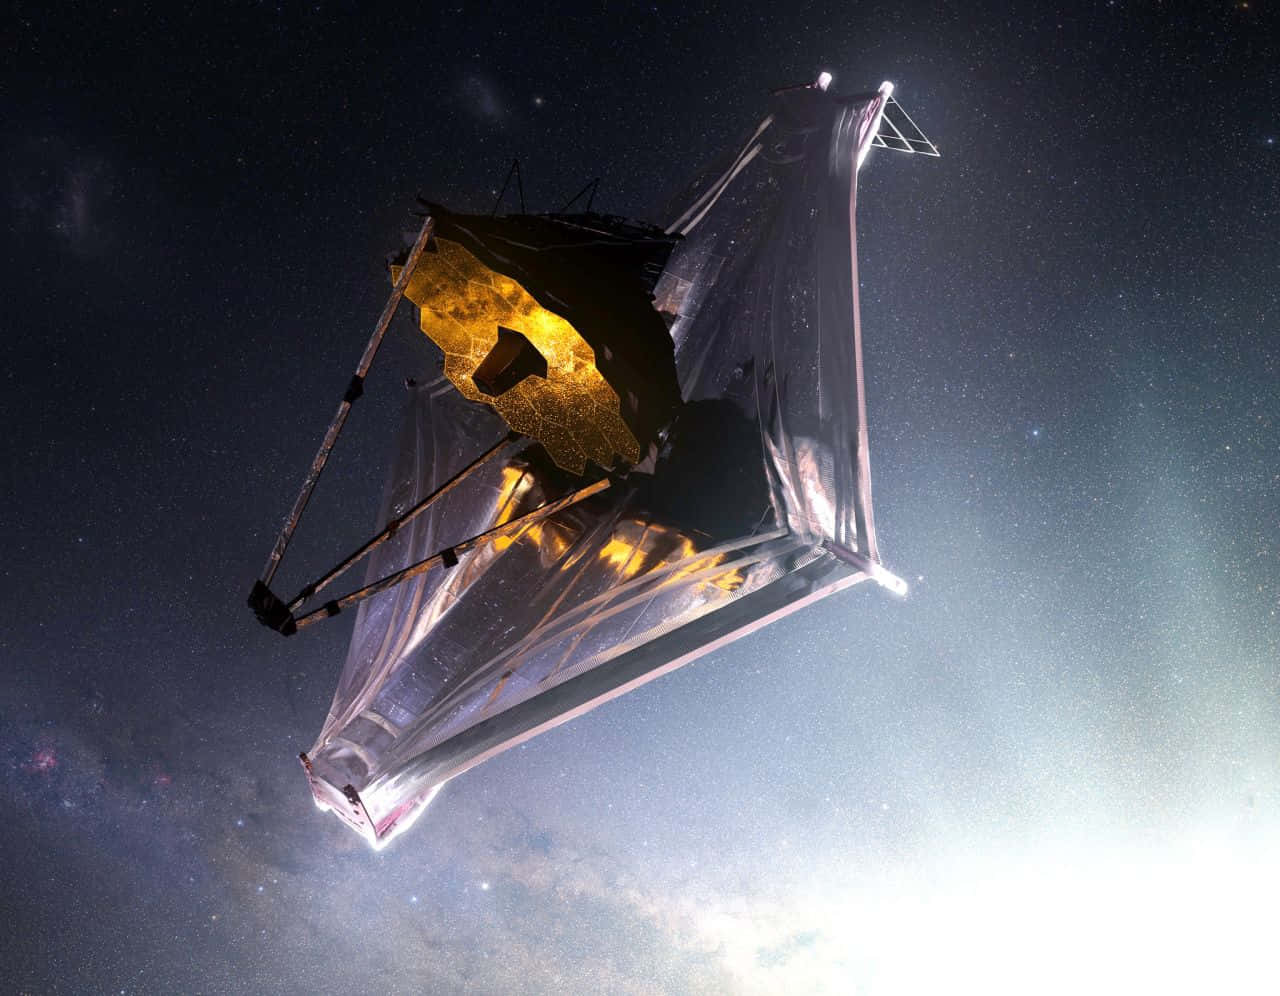 Imagendel Satélite Del Telescopio James Webb